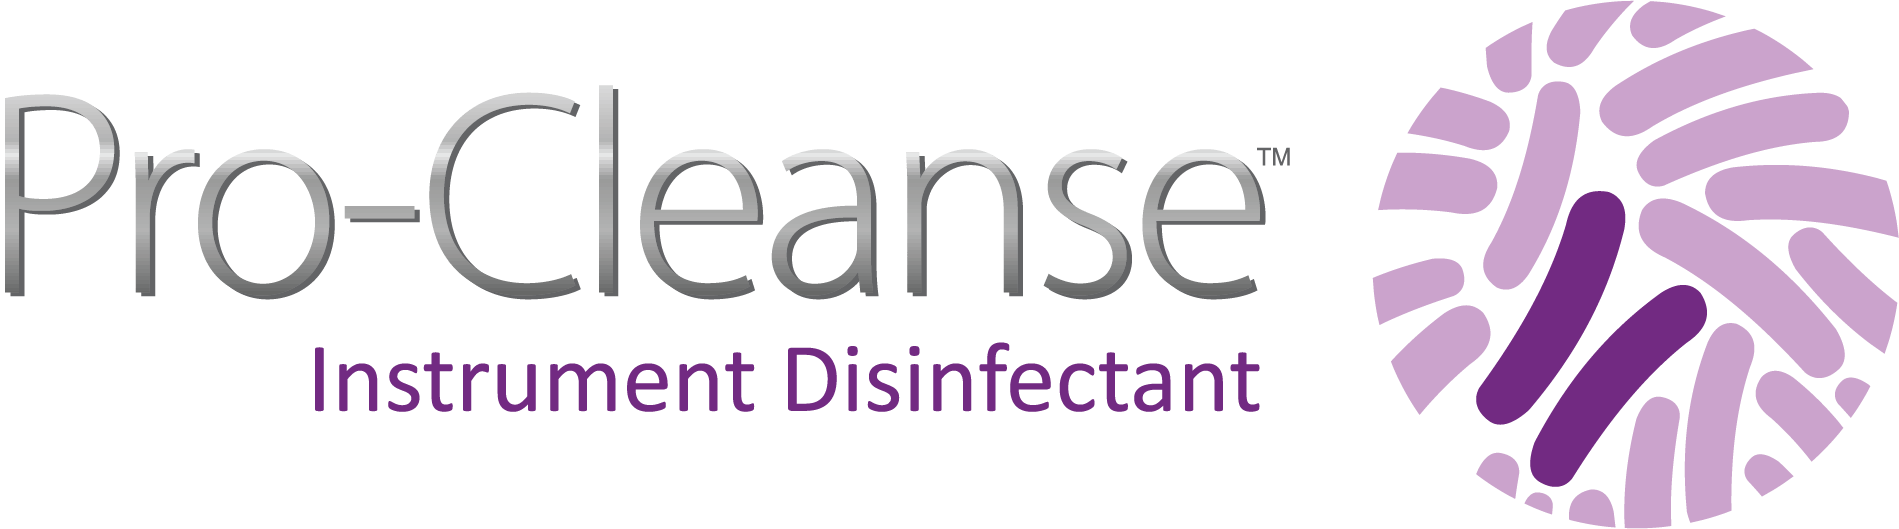 pro-cleanse logo